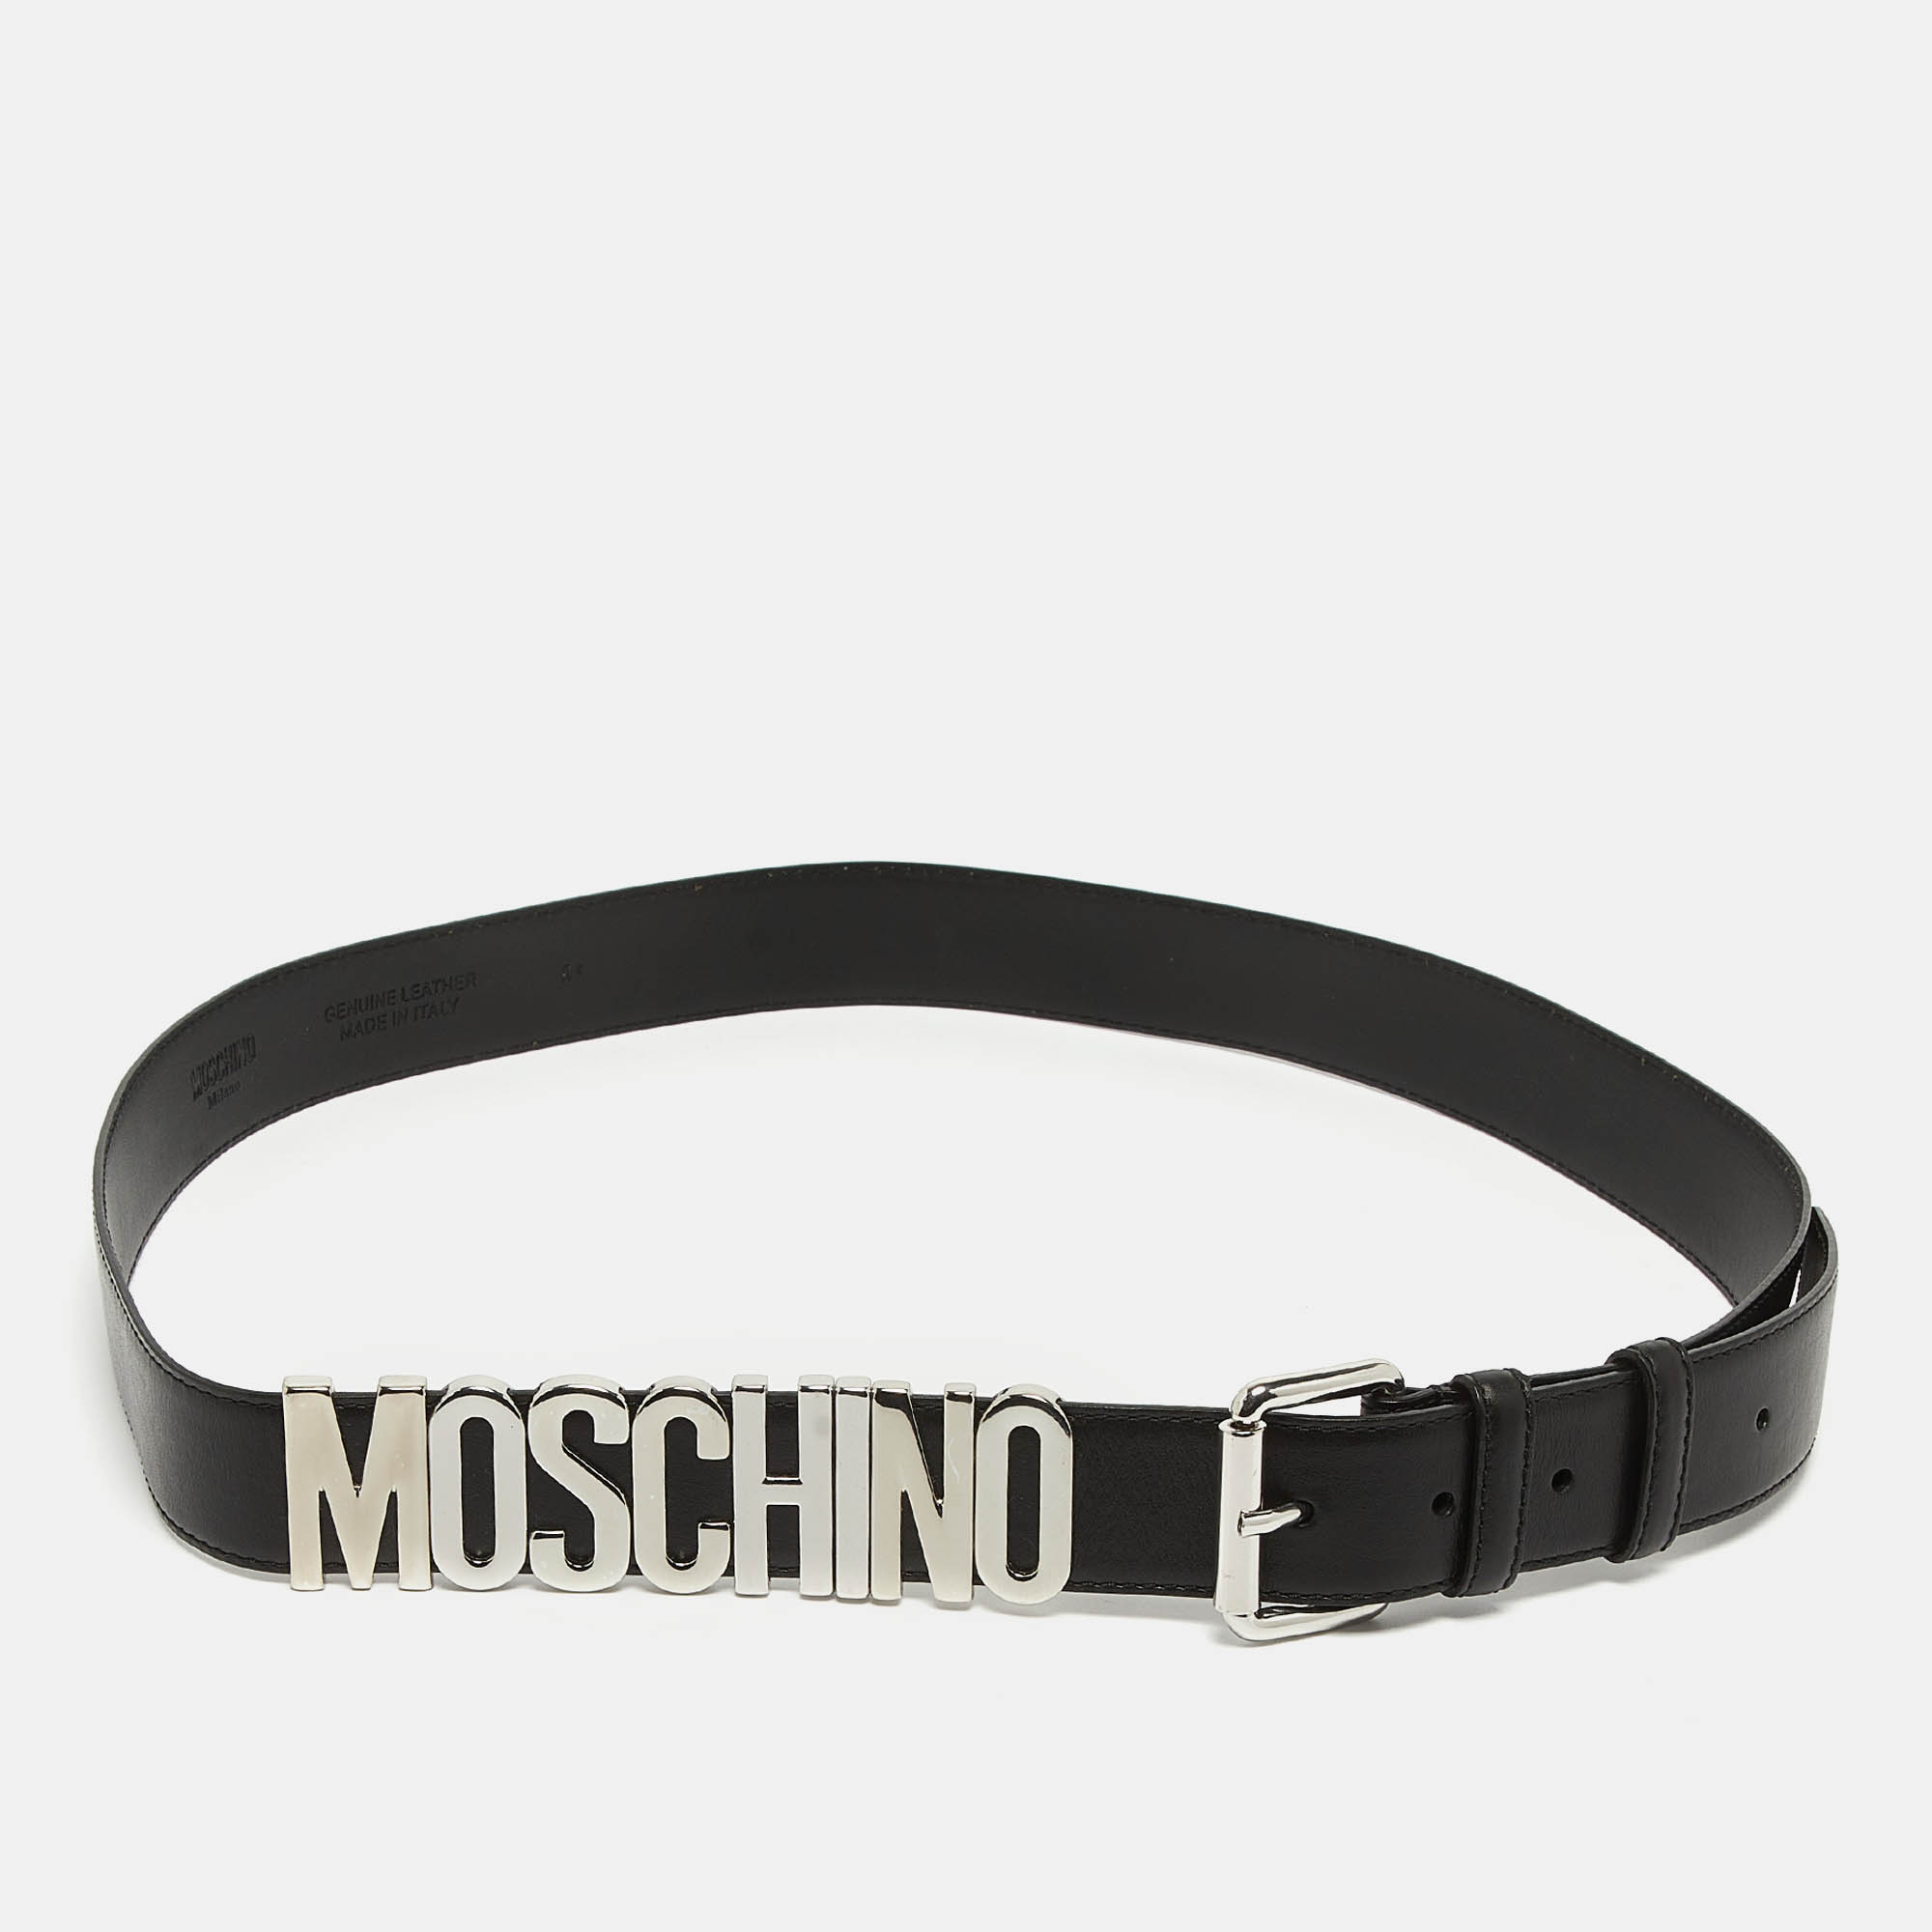 Moschino black leather classic logo buckle belt